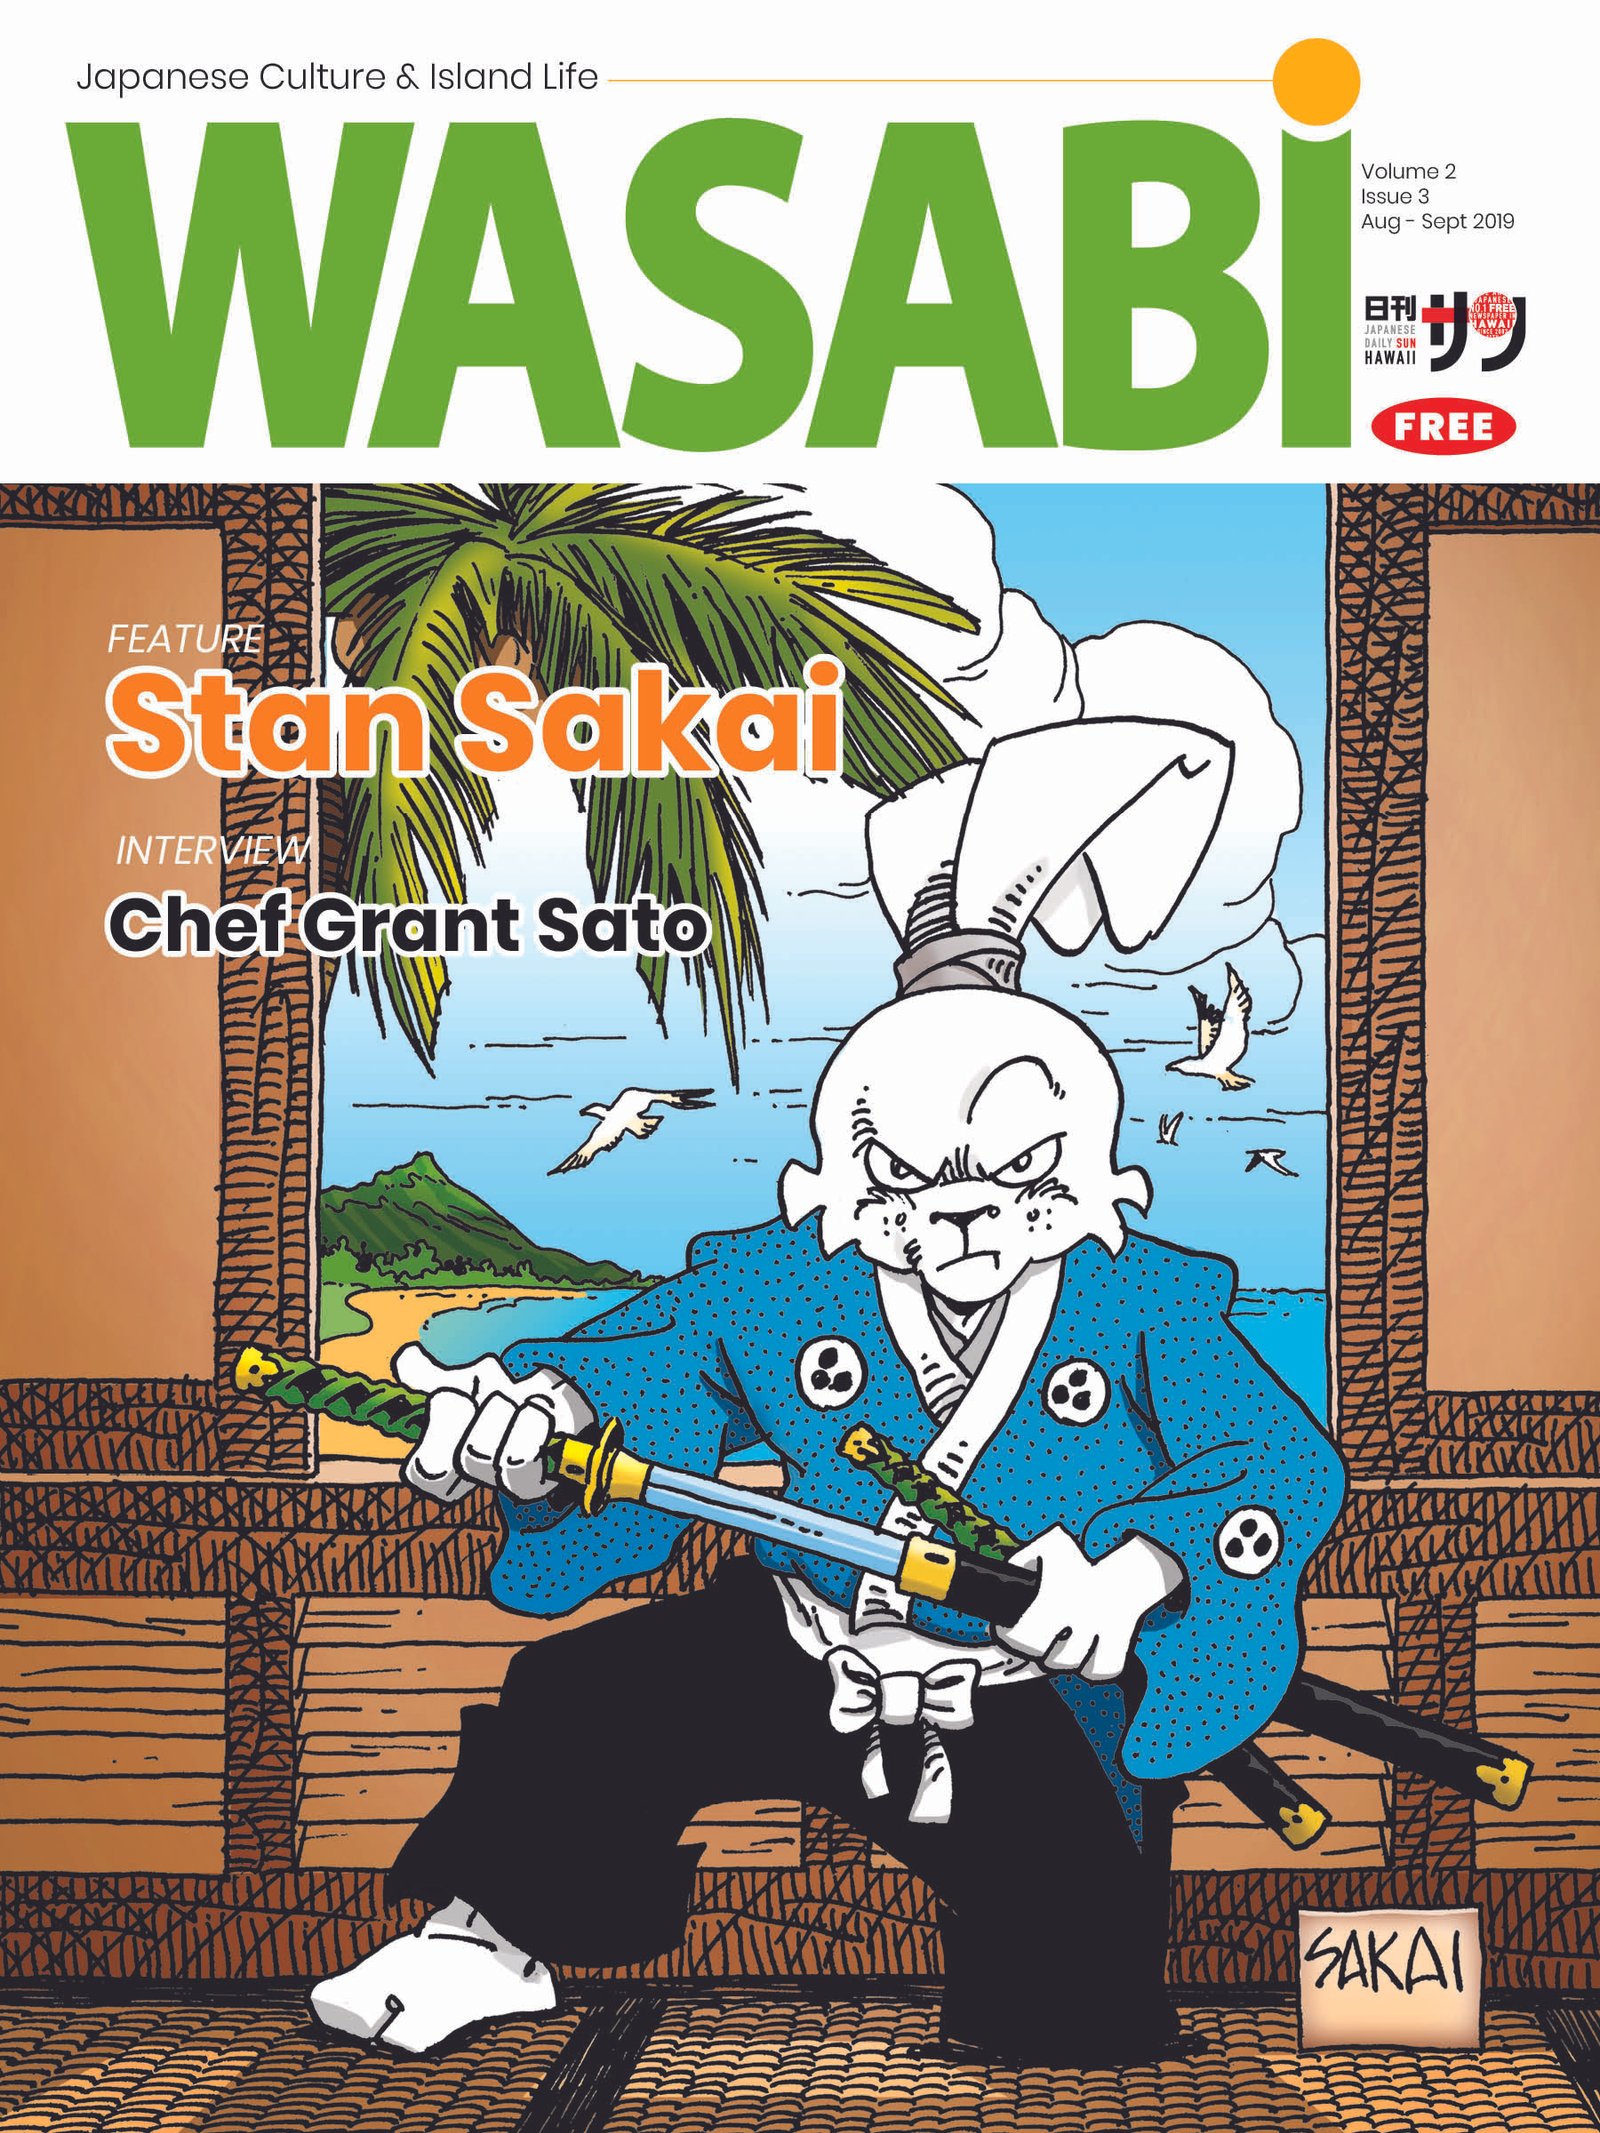 The cover of the August-September 2019 (Volume 2 Issue 3) issue of Wasabi magazine. Features original artwork of Miyamoto Usagi (Usagi Yojimbo) by Stan Sakai. Coloring by Jason Nobriga. Courtesy of Wasabi magazine (www.readwasabi.com).